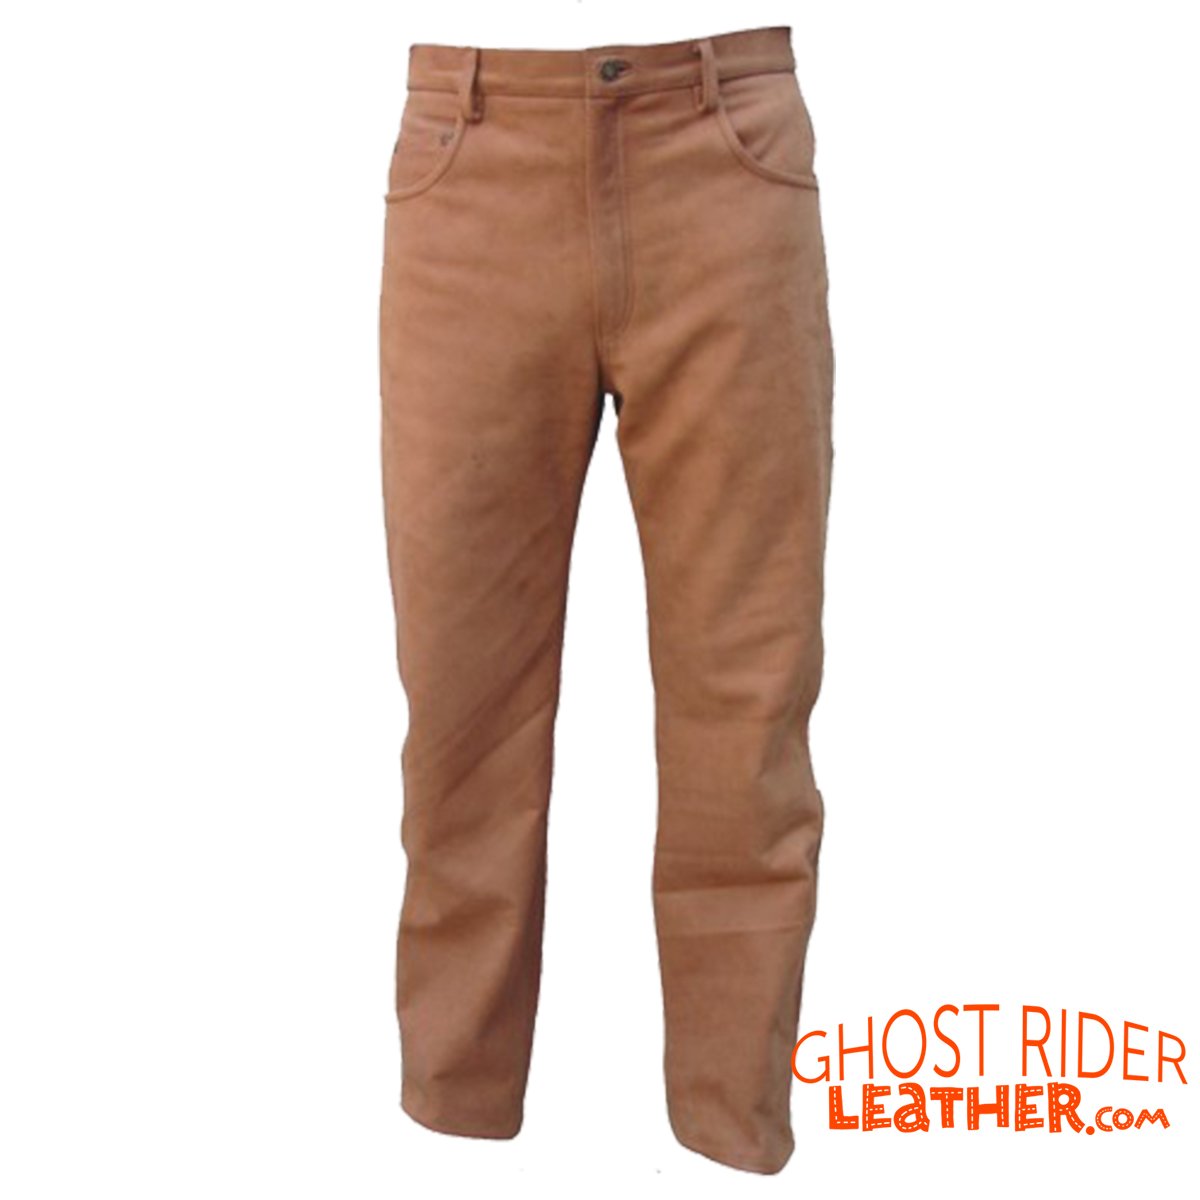 Leather Pants - Men's - Brown Buffalo - Motorcycle - AL2505-AL